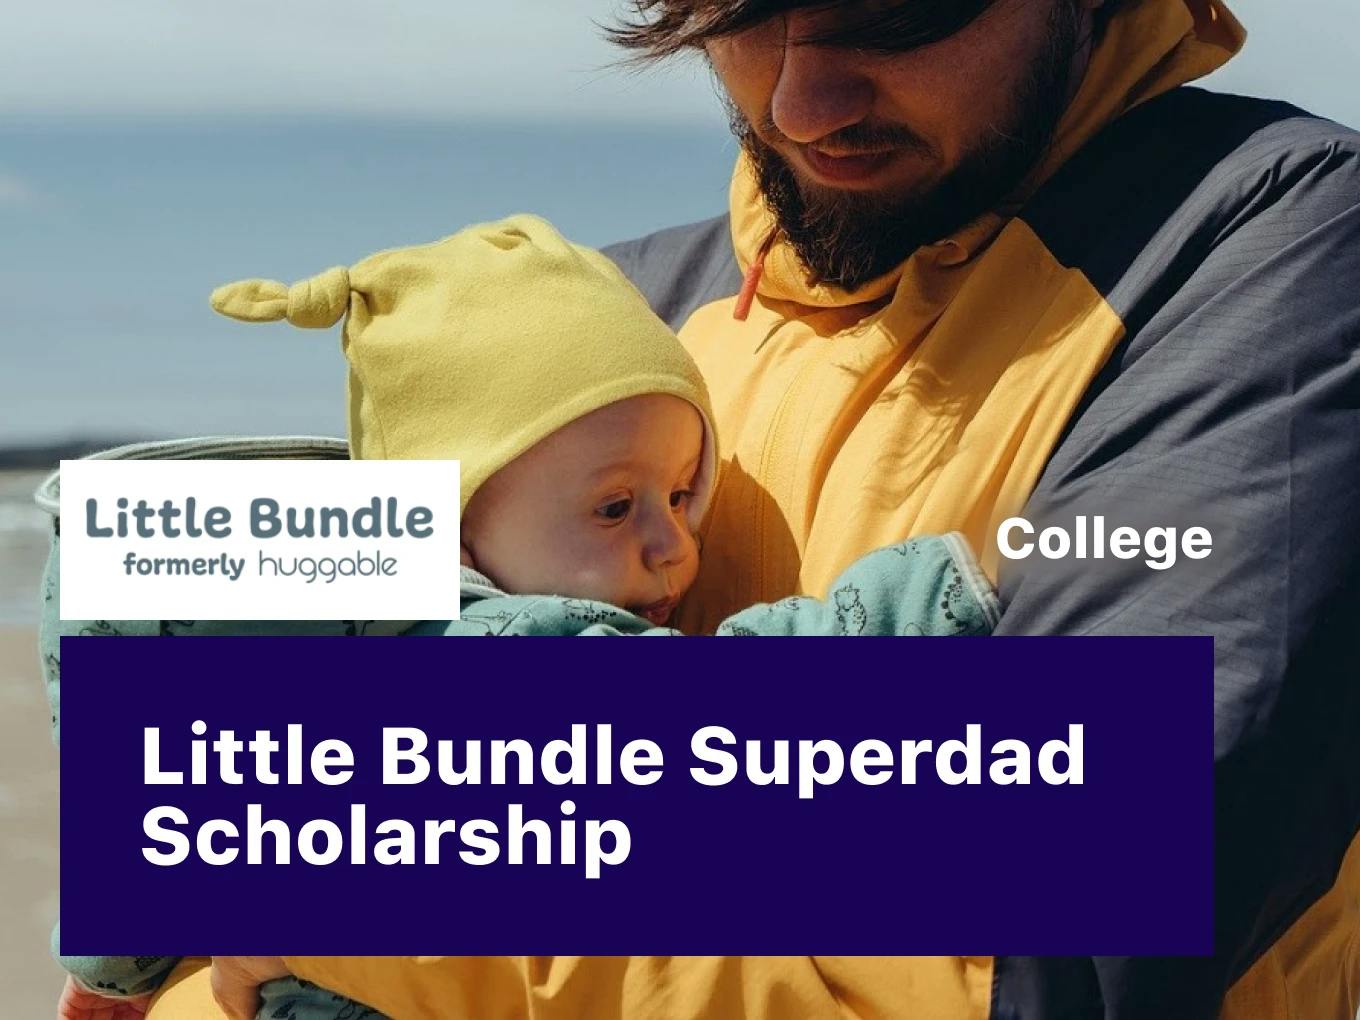 Little Bundle Superdad Scholarship — College Award